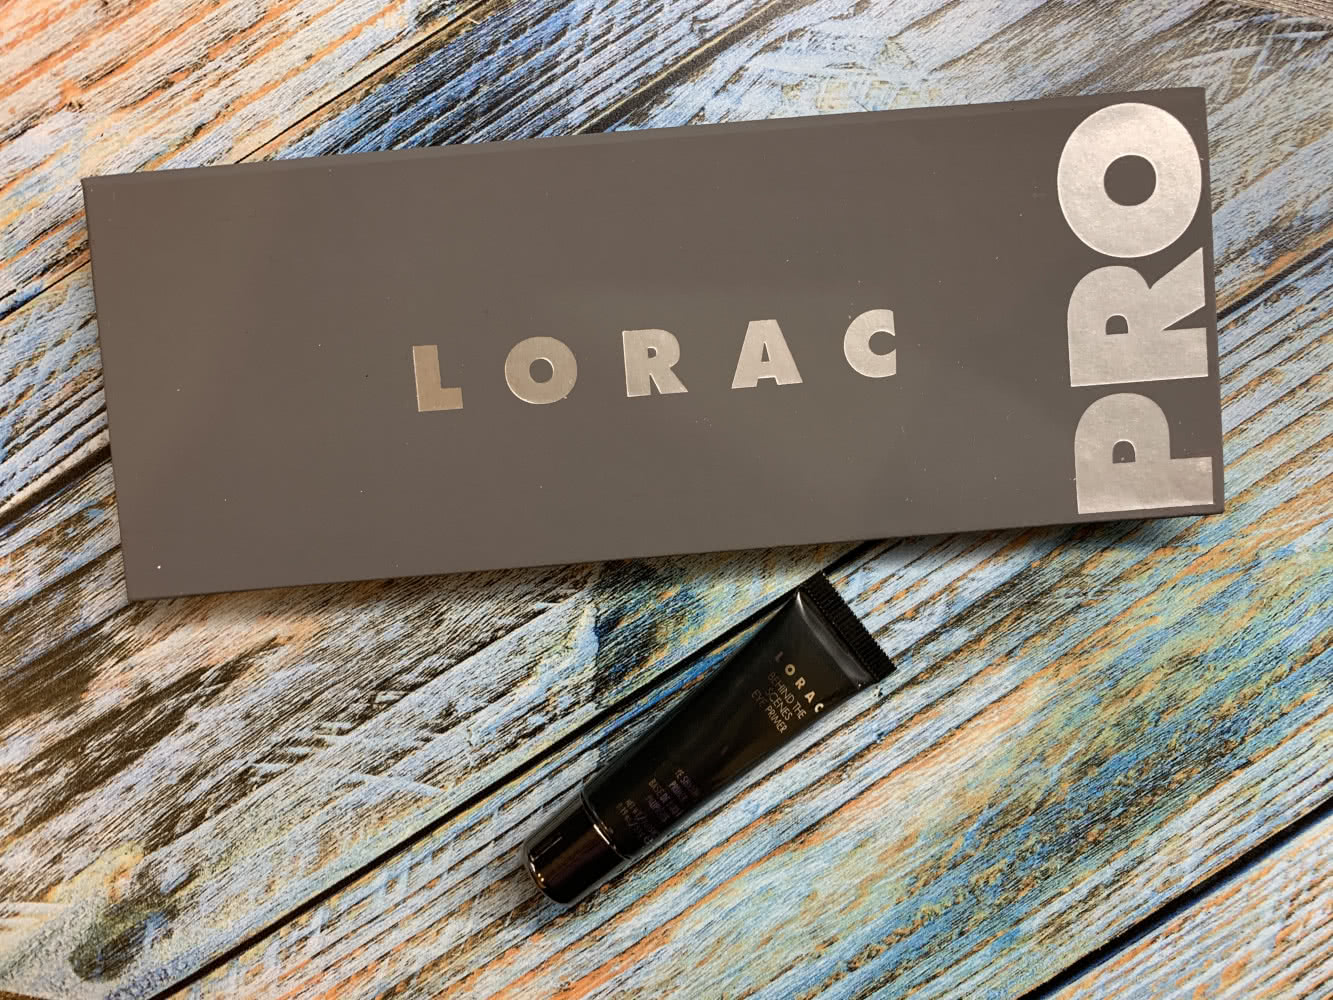 Lorac pro palette 2 + праймер для теней